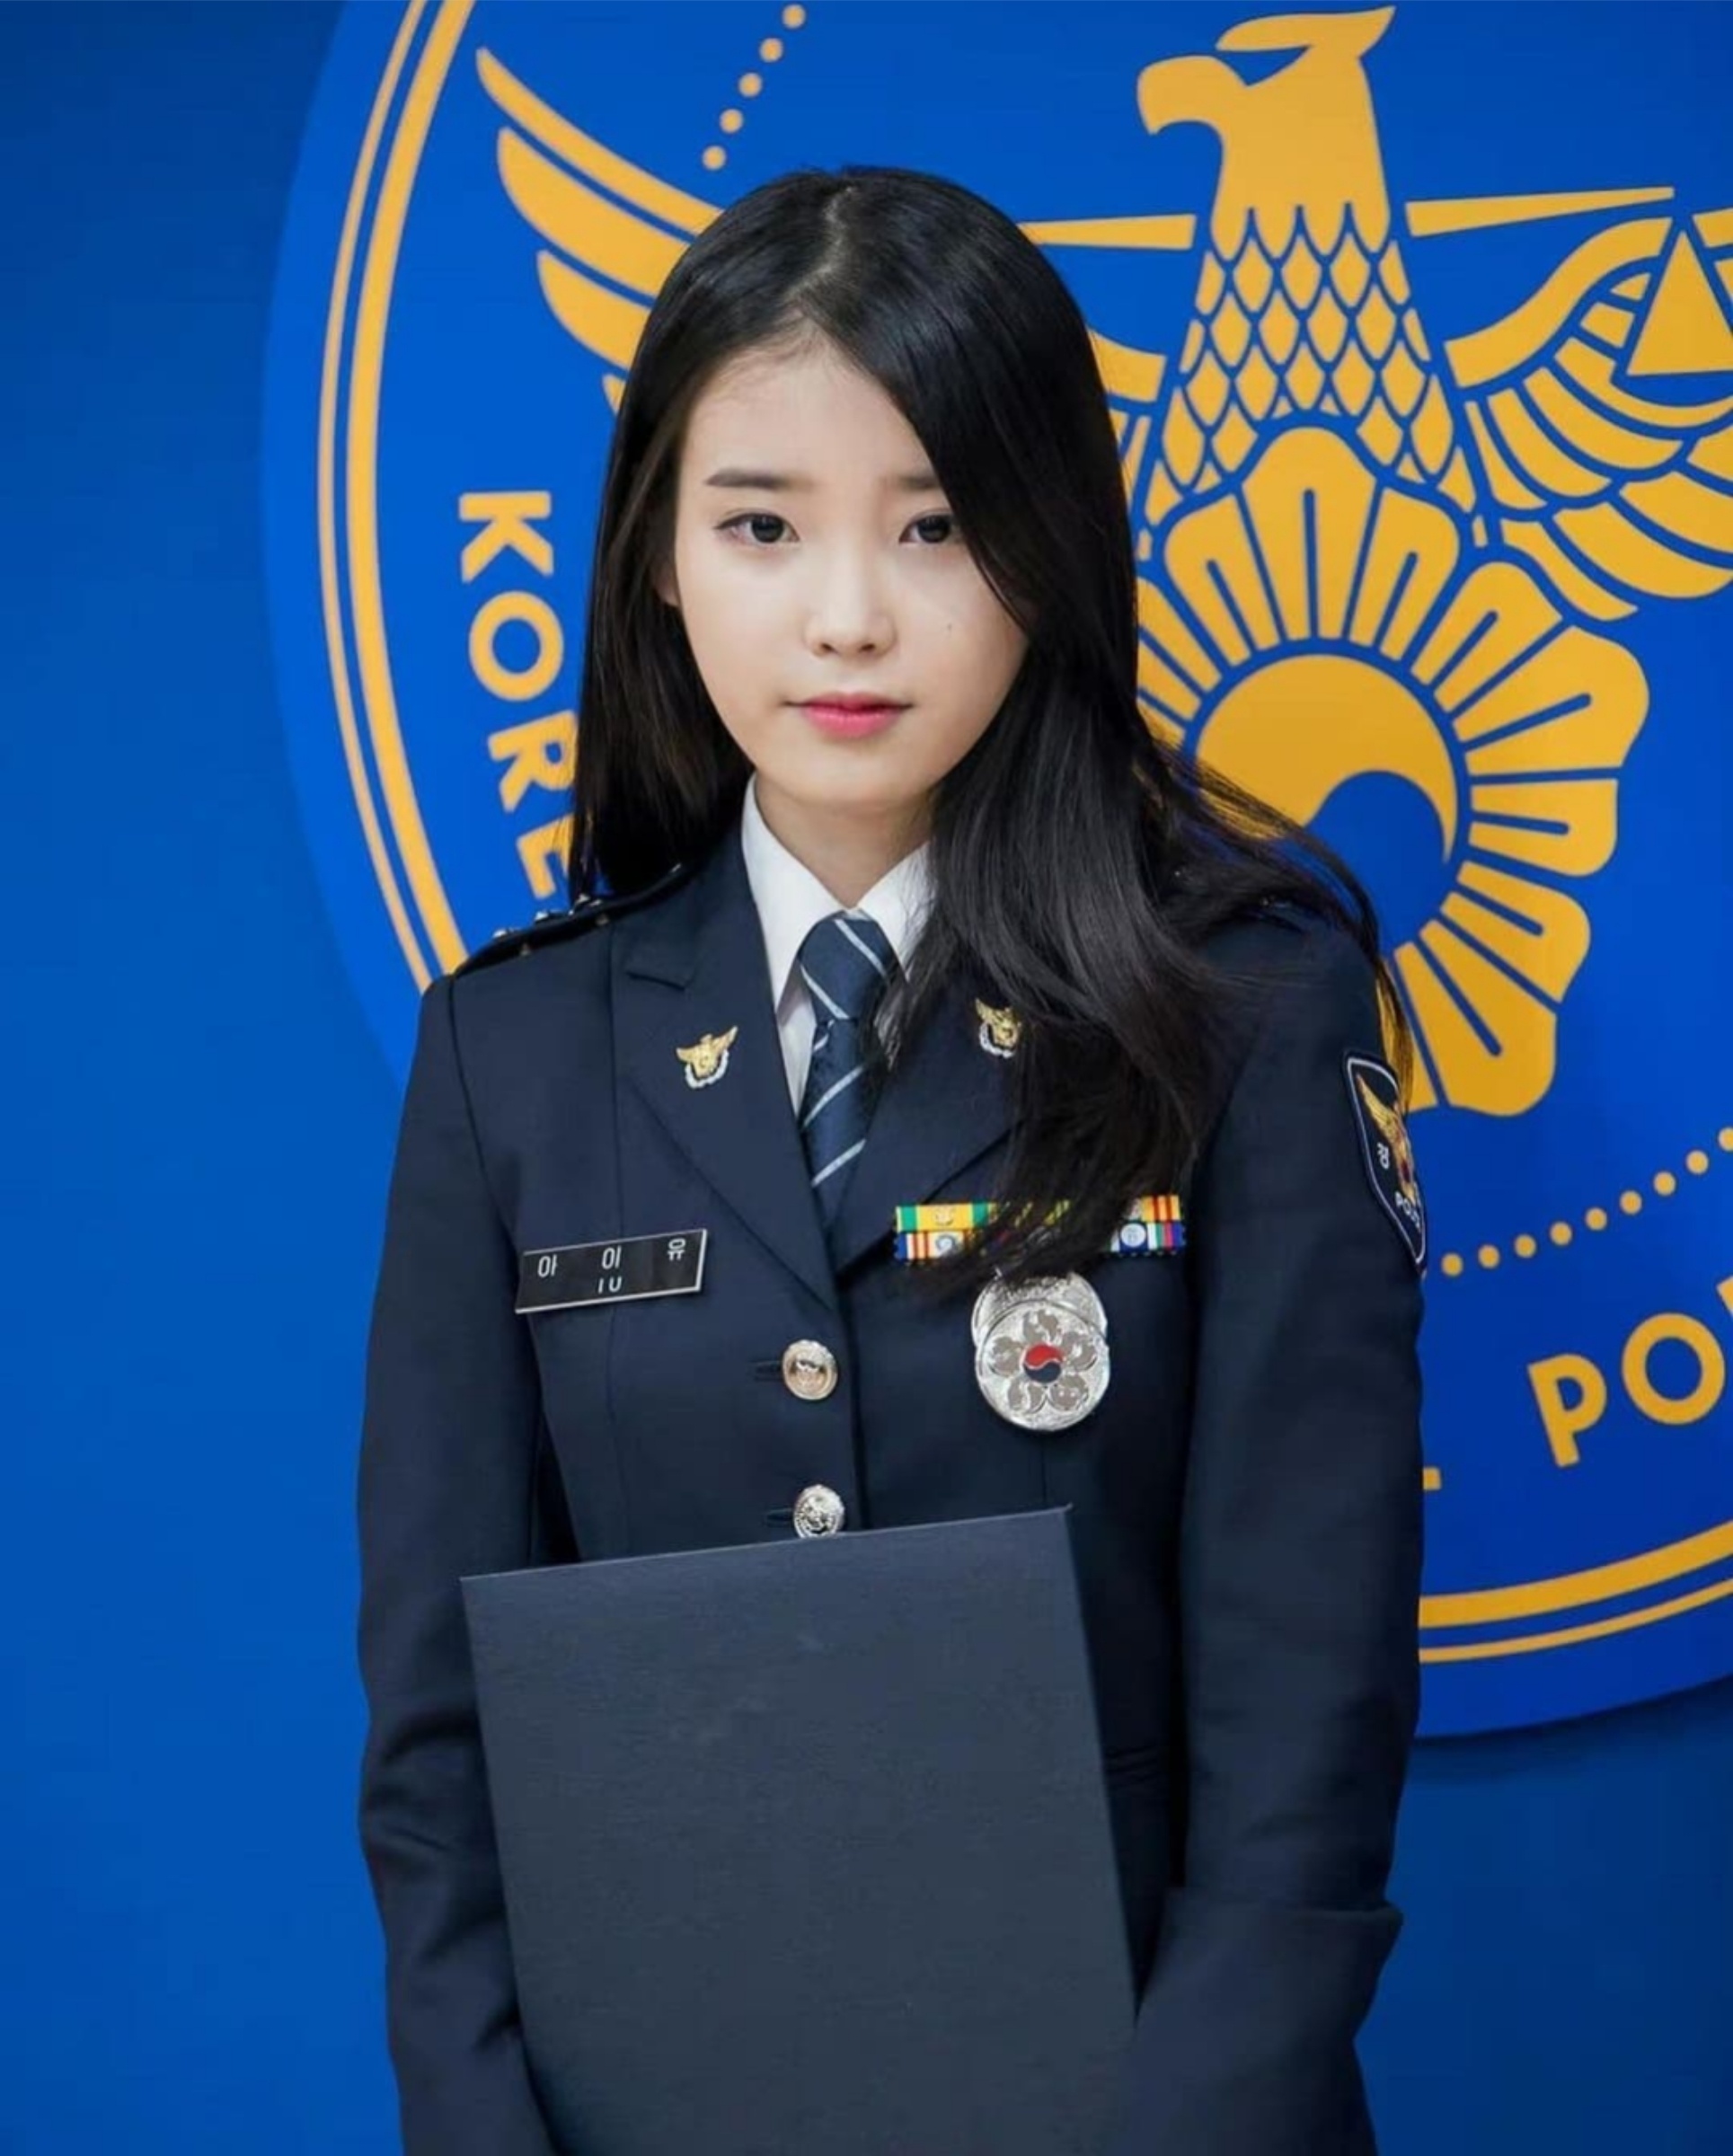 IU as Police Girl  lrP8JGG.jpg